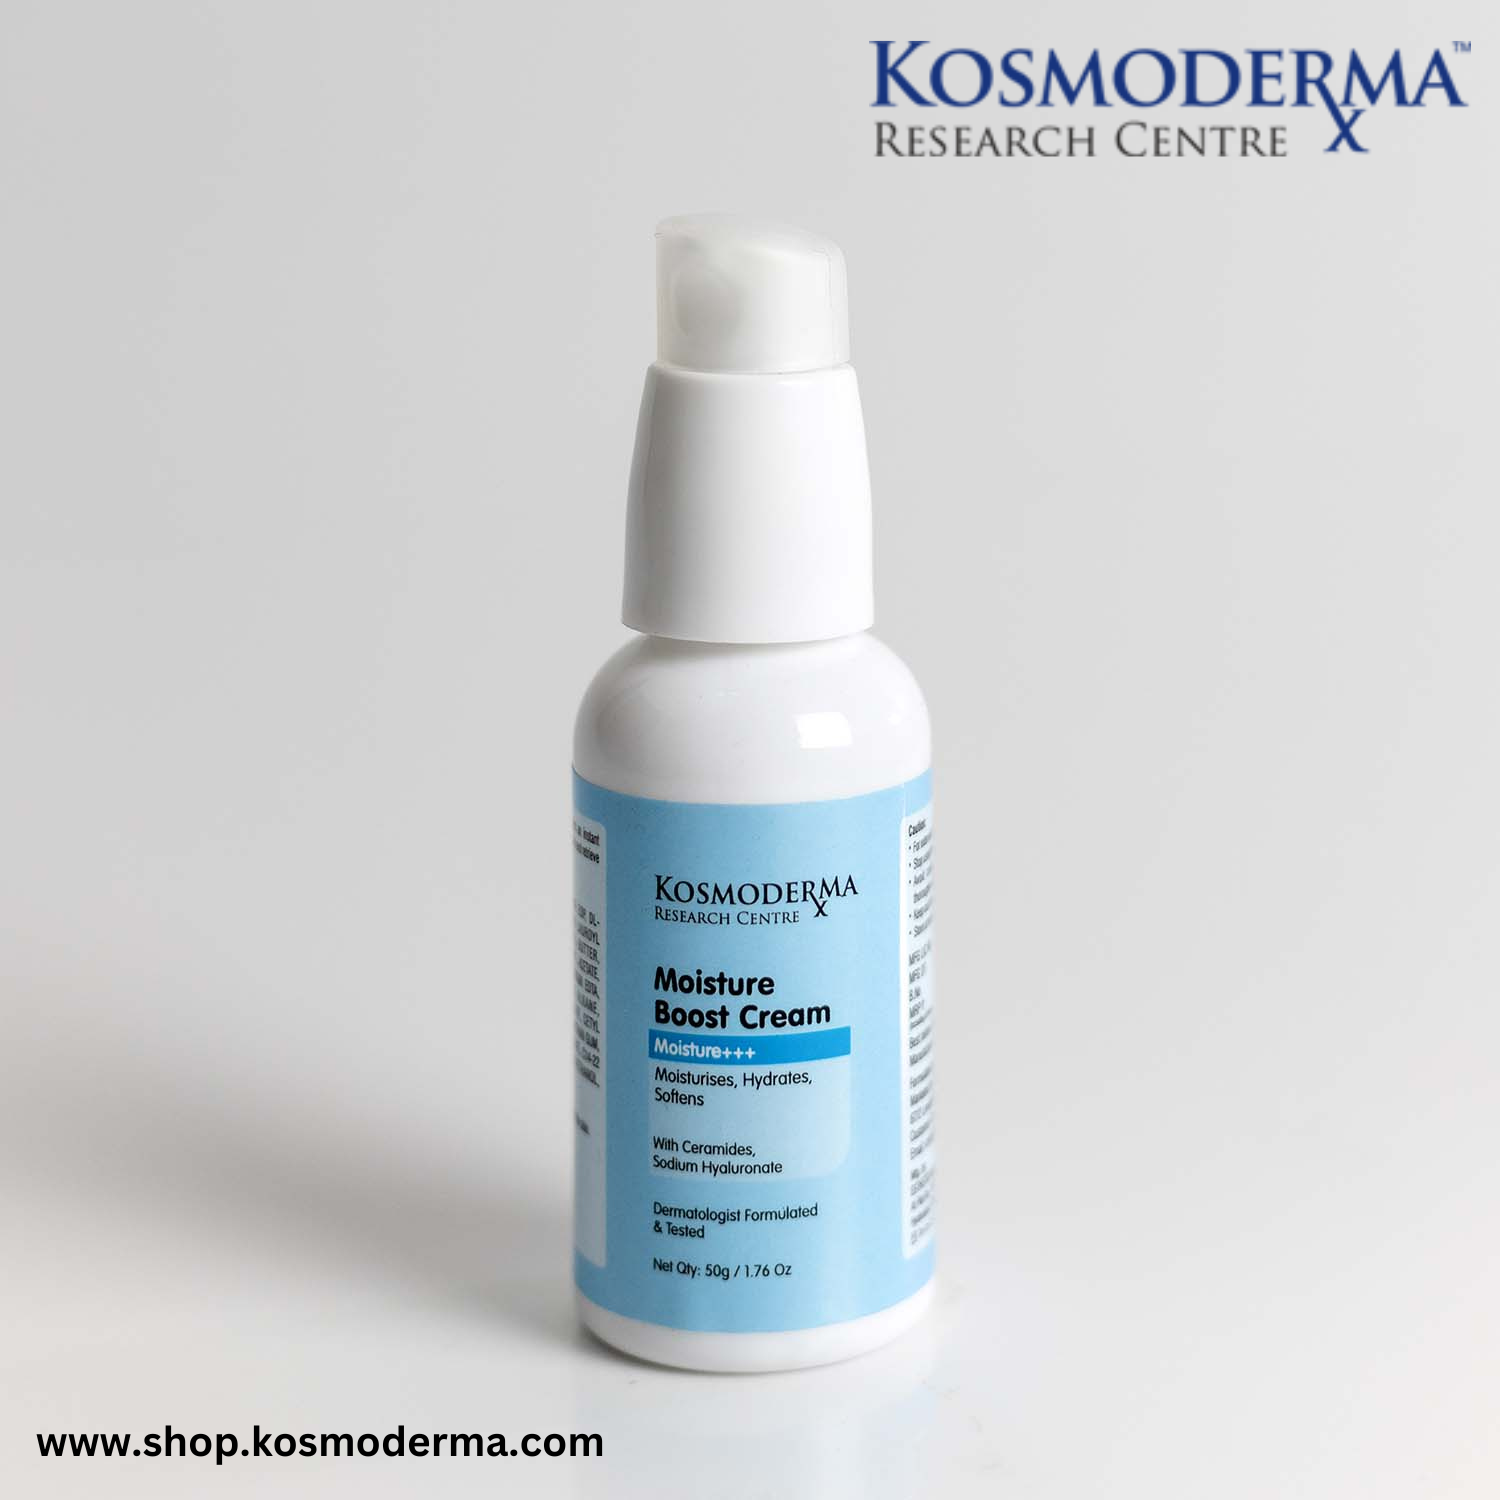  Moisture Boost Cream Light Gel Moisturizer for Oily Skin Kosmoderma